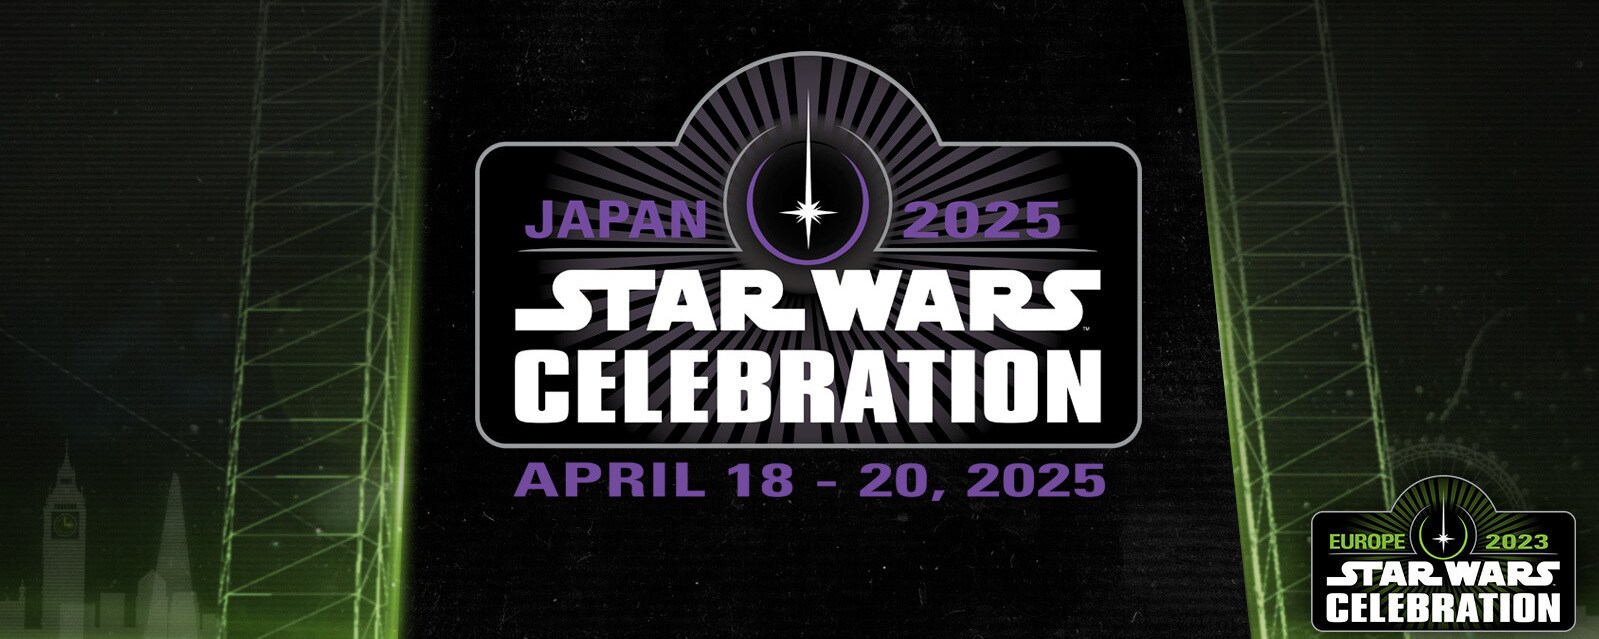 Star Wars Celebration 2025 logo